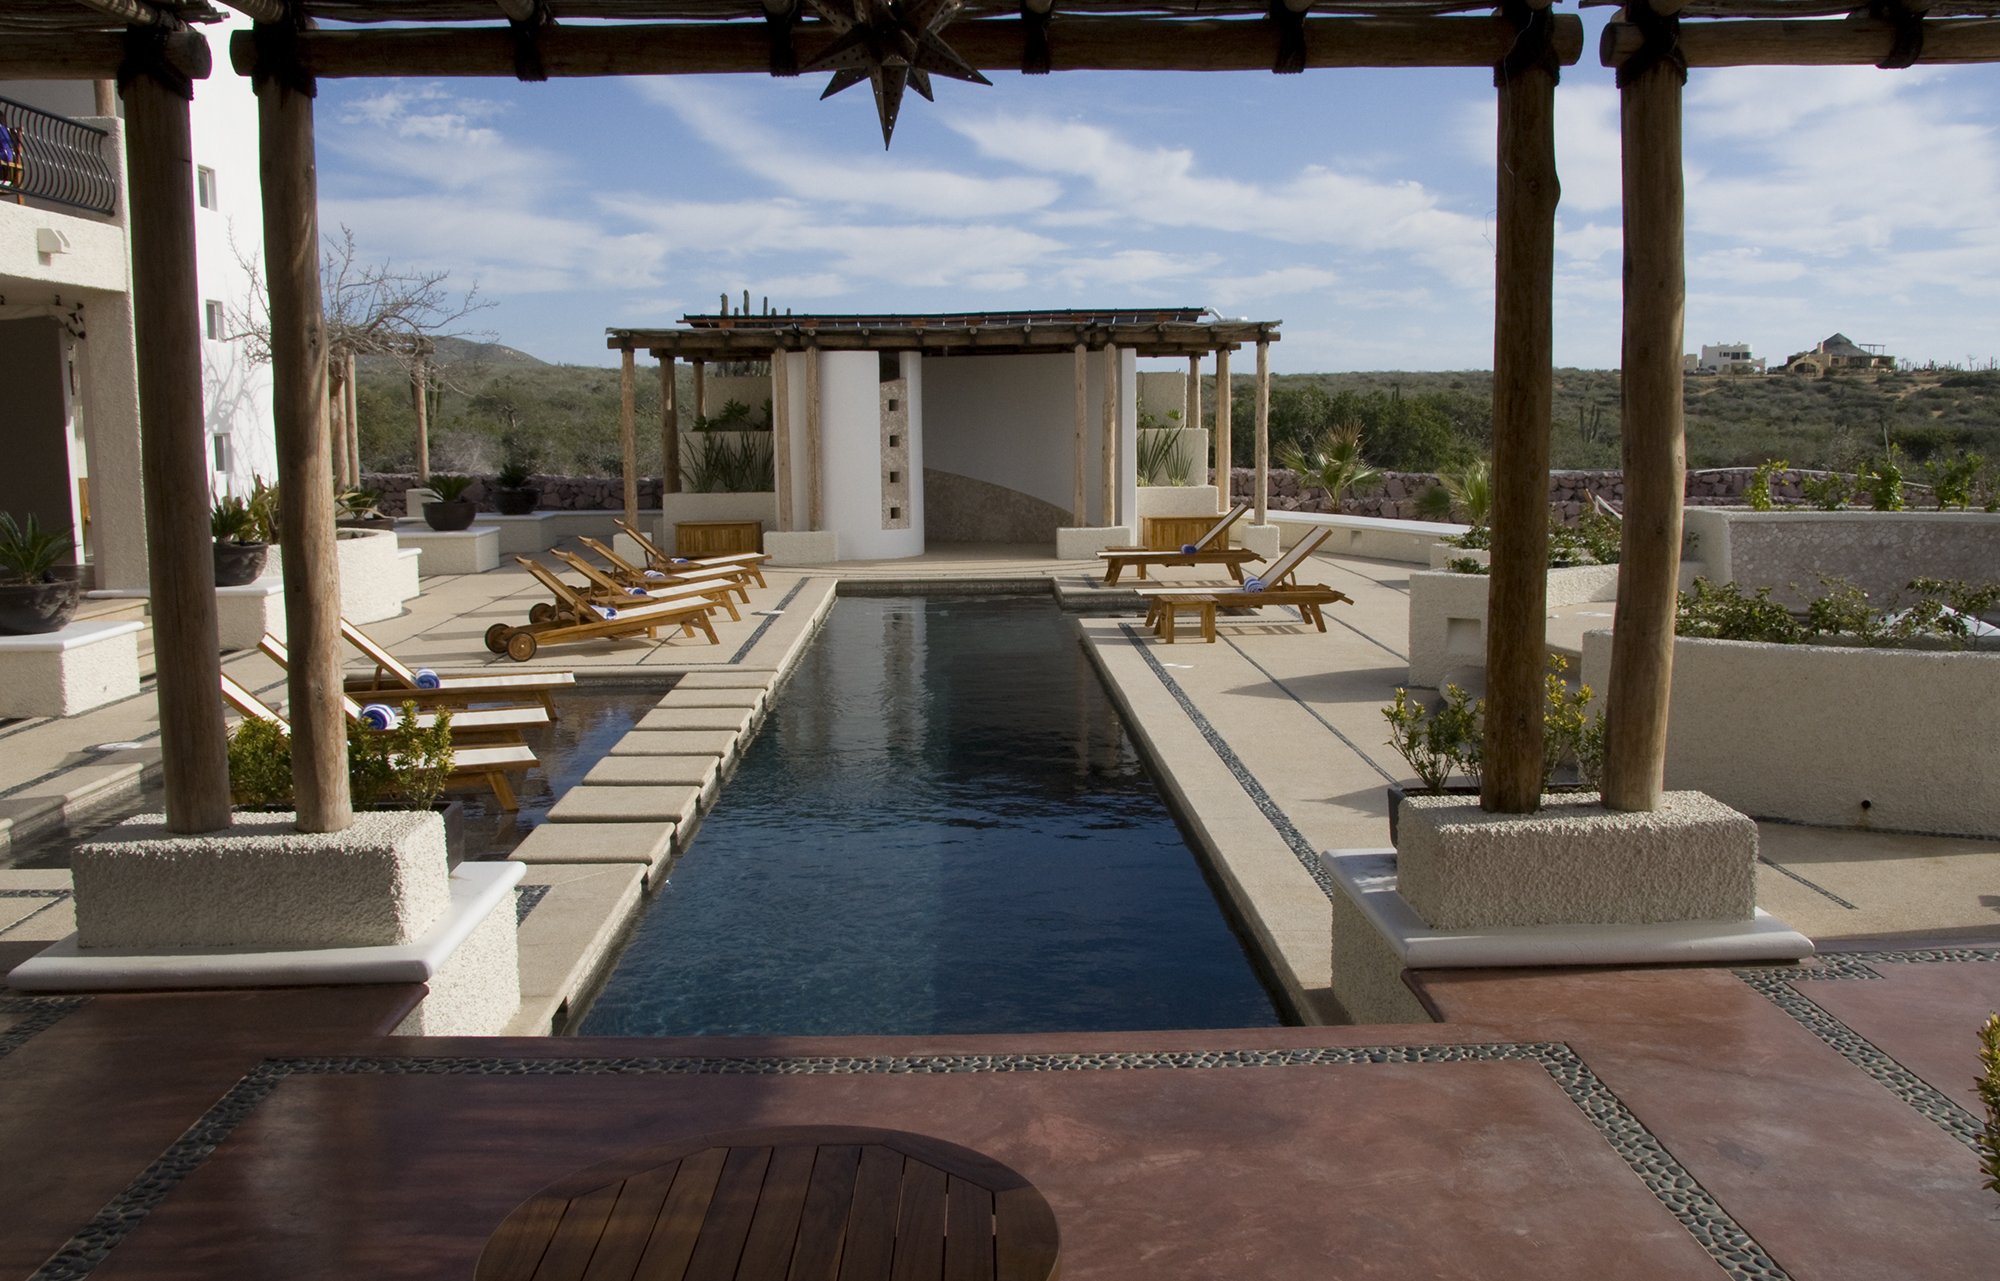 Swimming Pool at the Resort in Baja Mexico (Copy) (Copy)